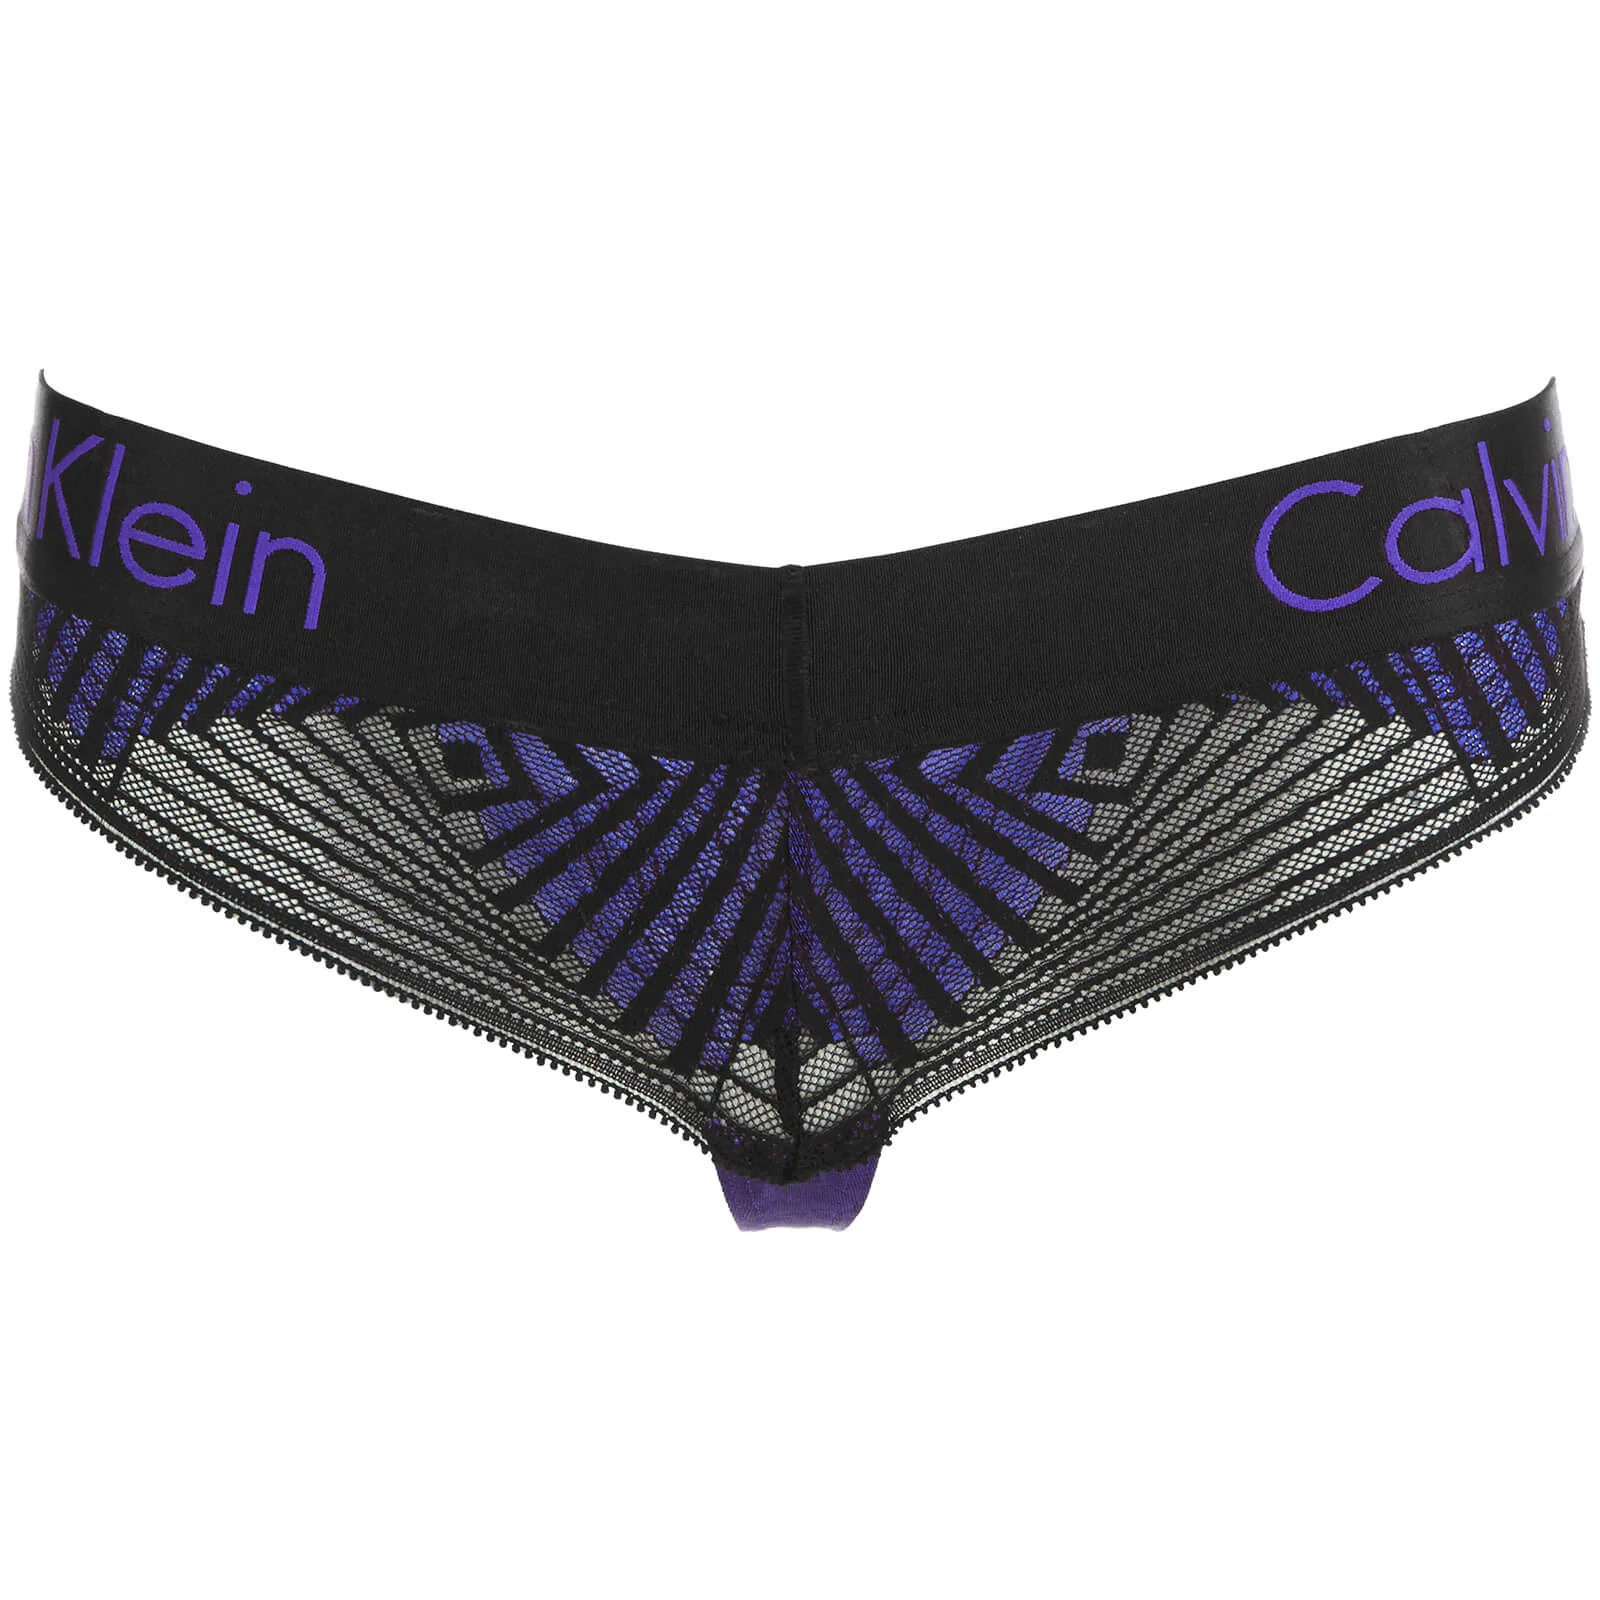 Calvin Klein Women's Dual Tone Limited Edition Thong - Black/Classic Indigo Image 1